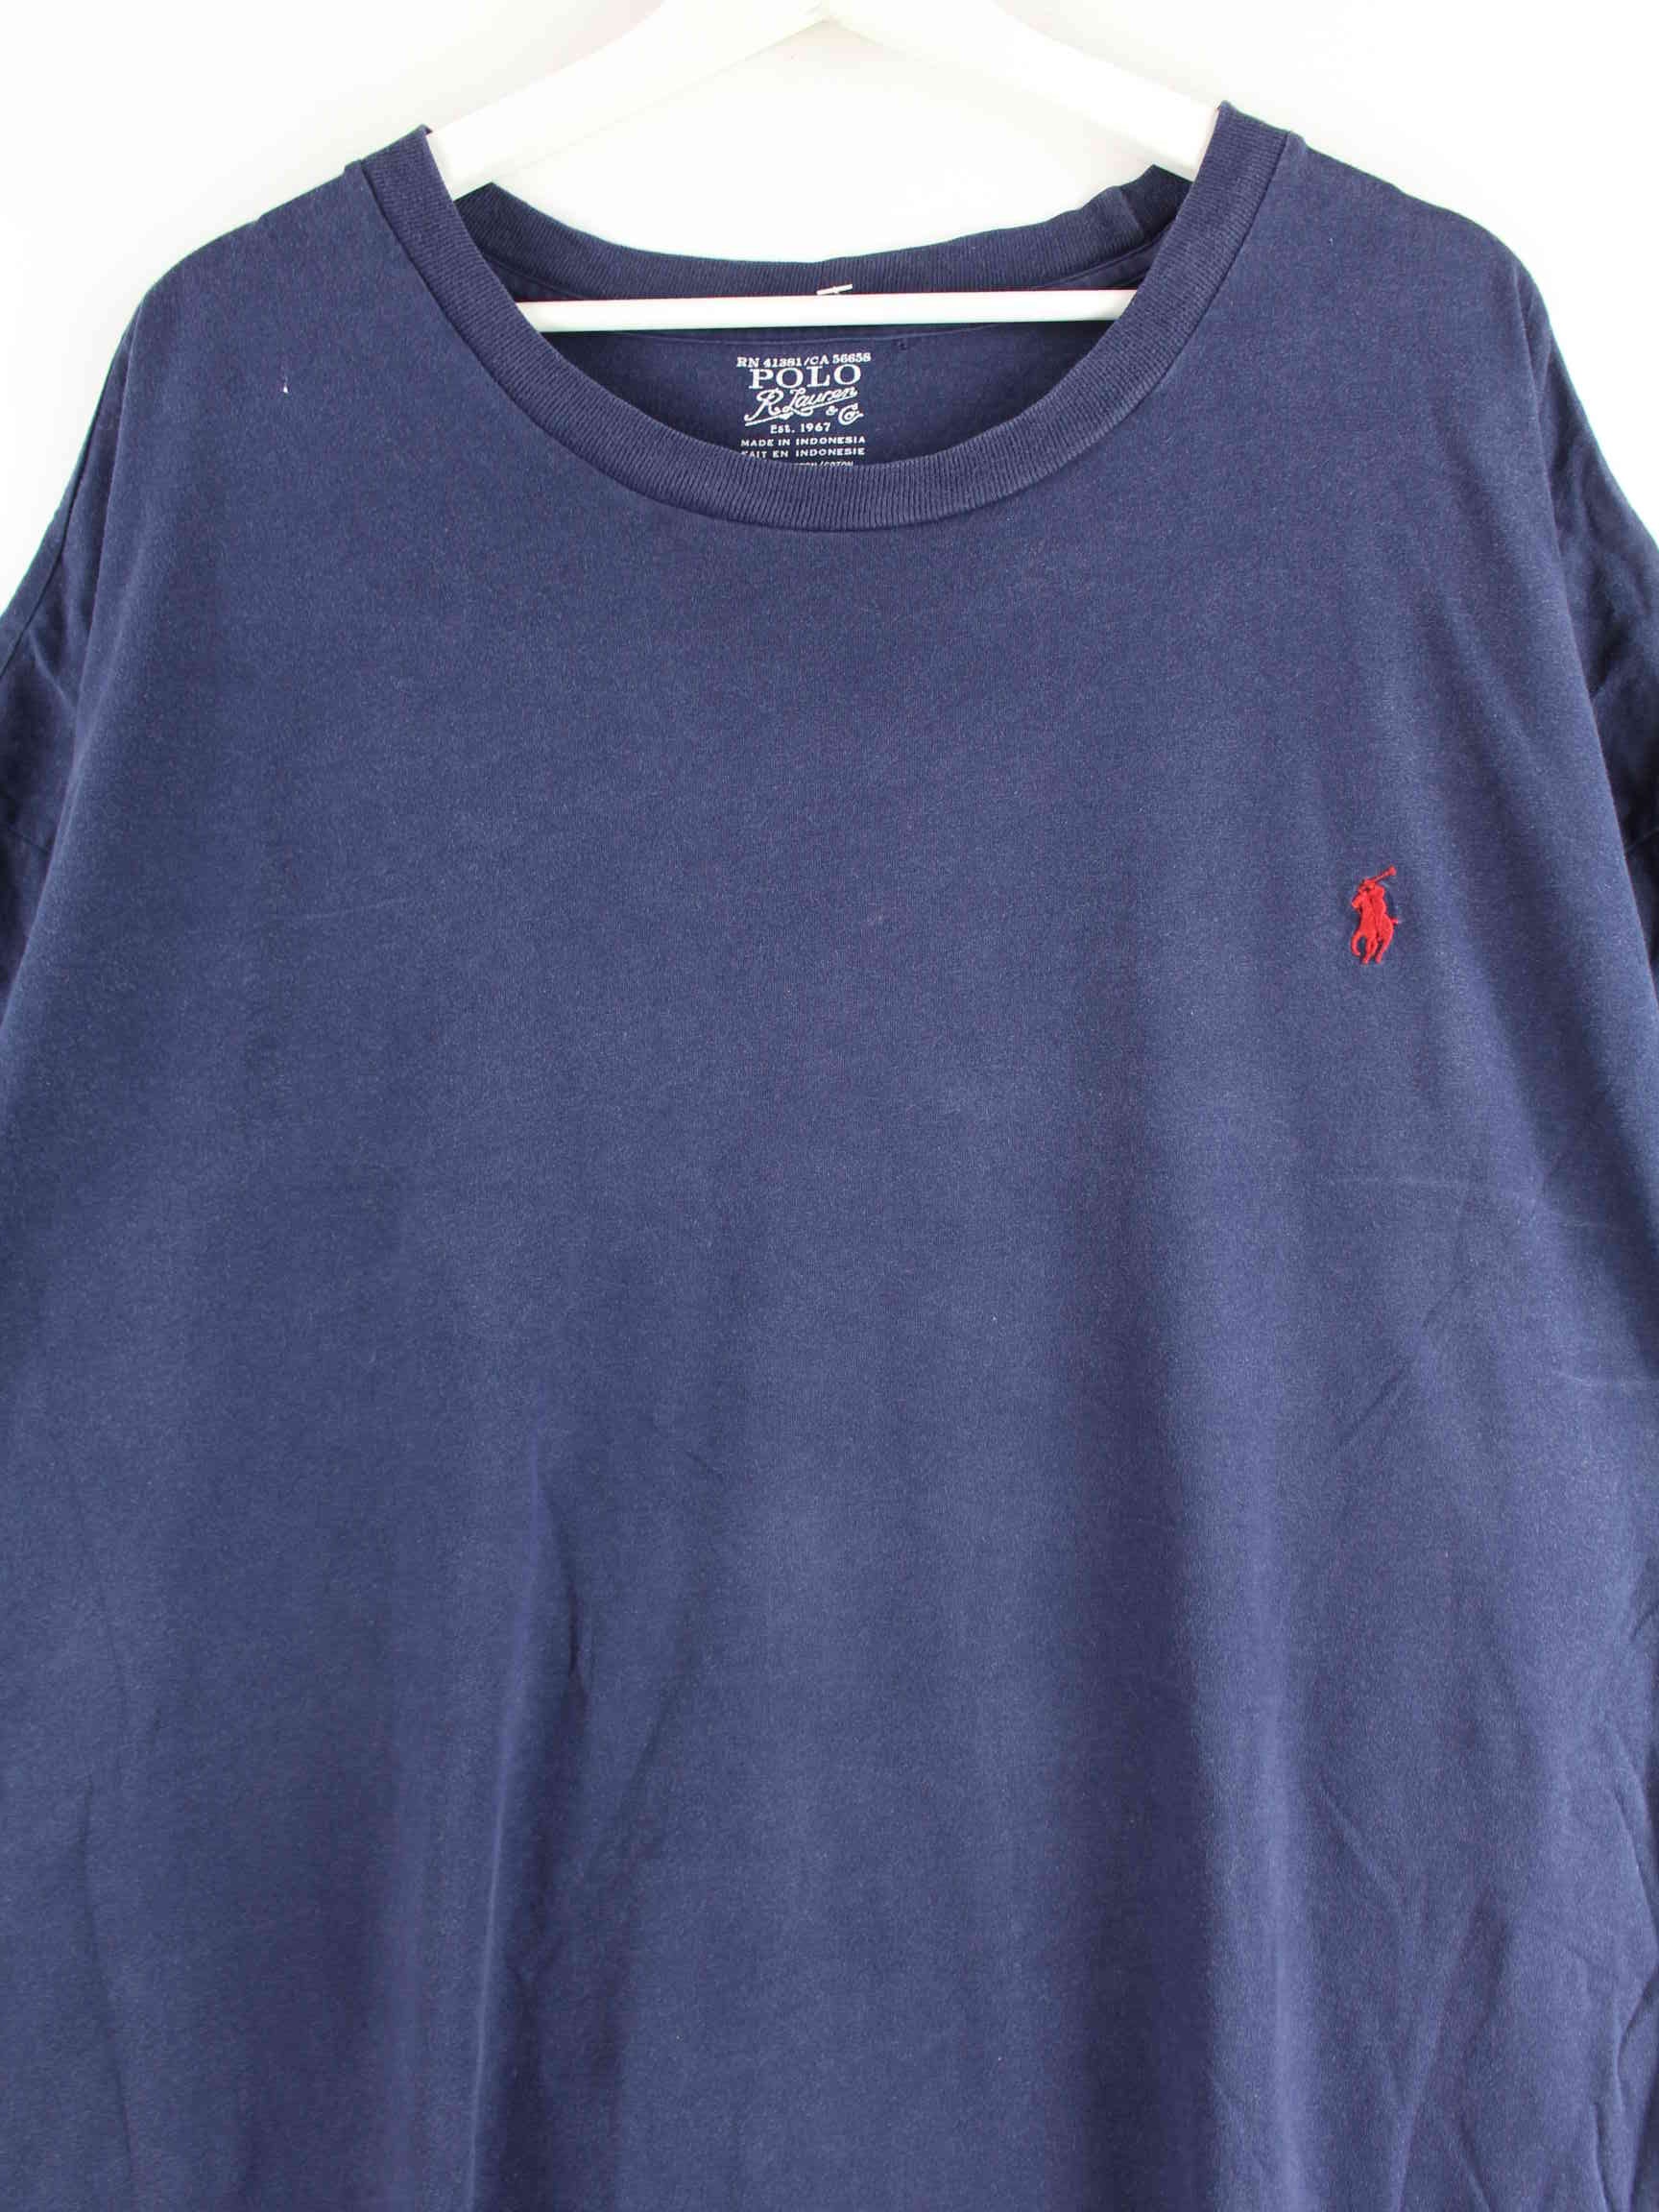 Ralph Lauren Basic T-Shirt Blau 4XL (detail image 1)